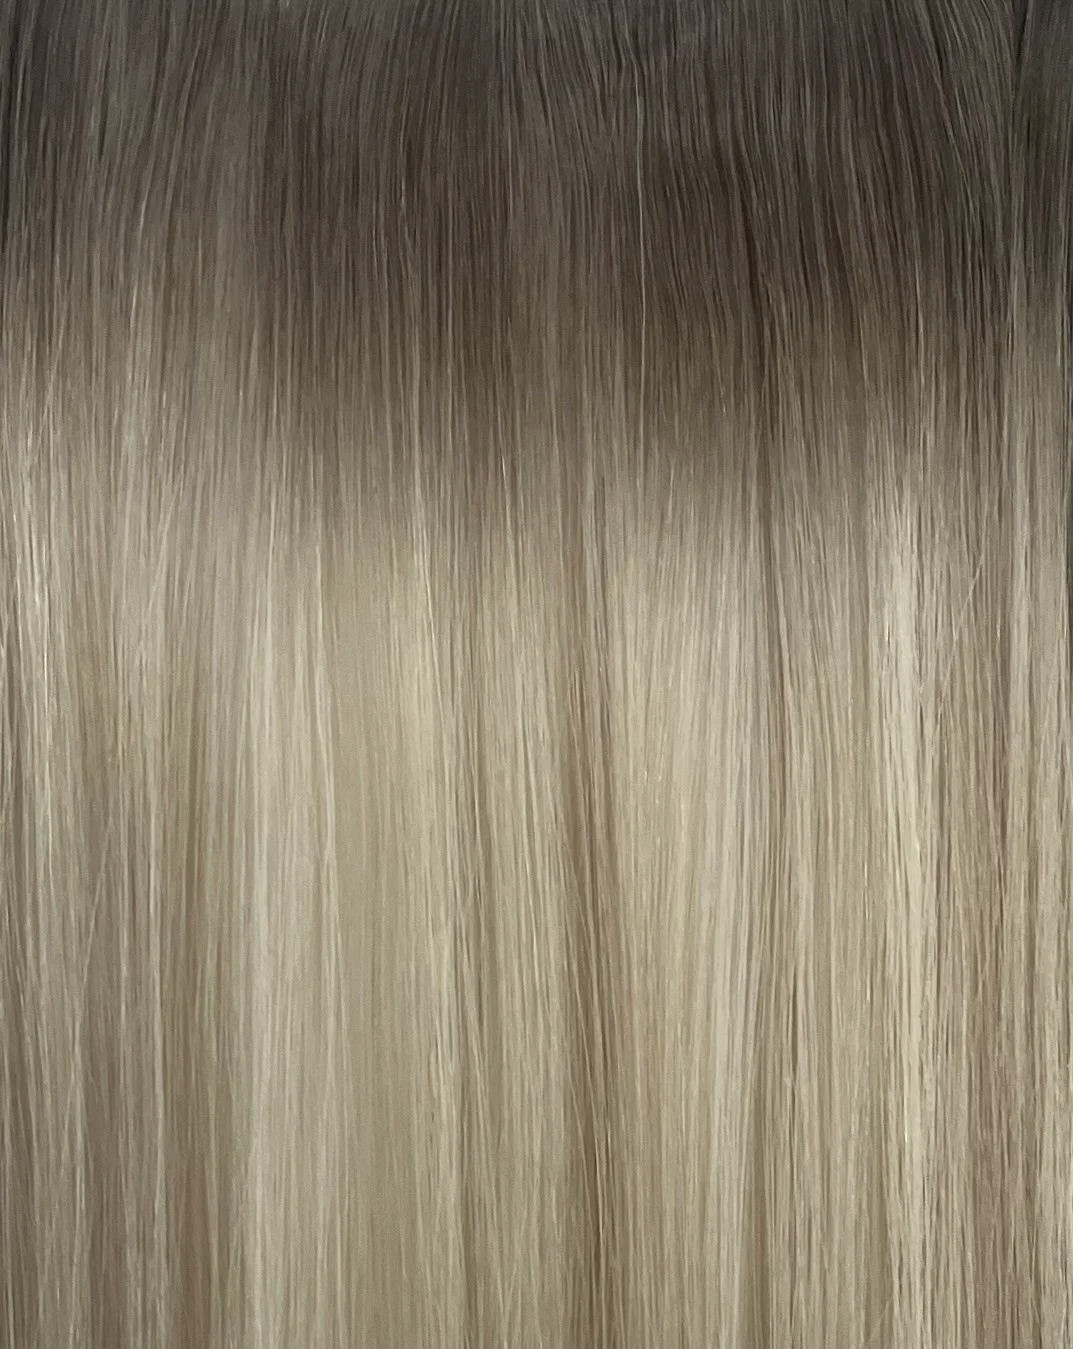 Ultra Thin Weft - Laguna Blonde-1